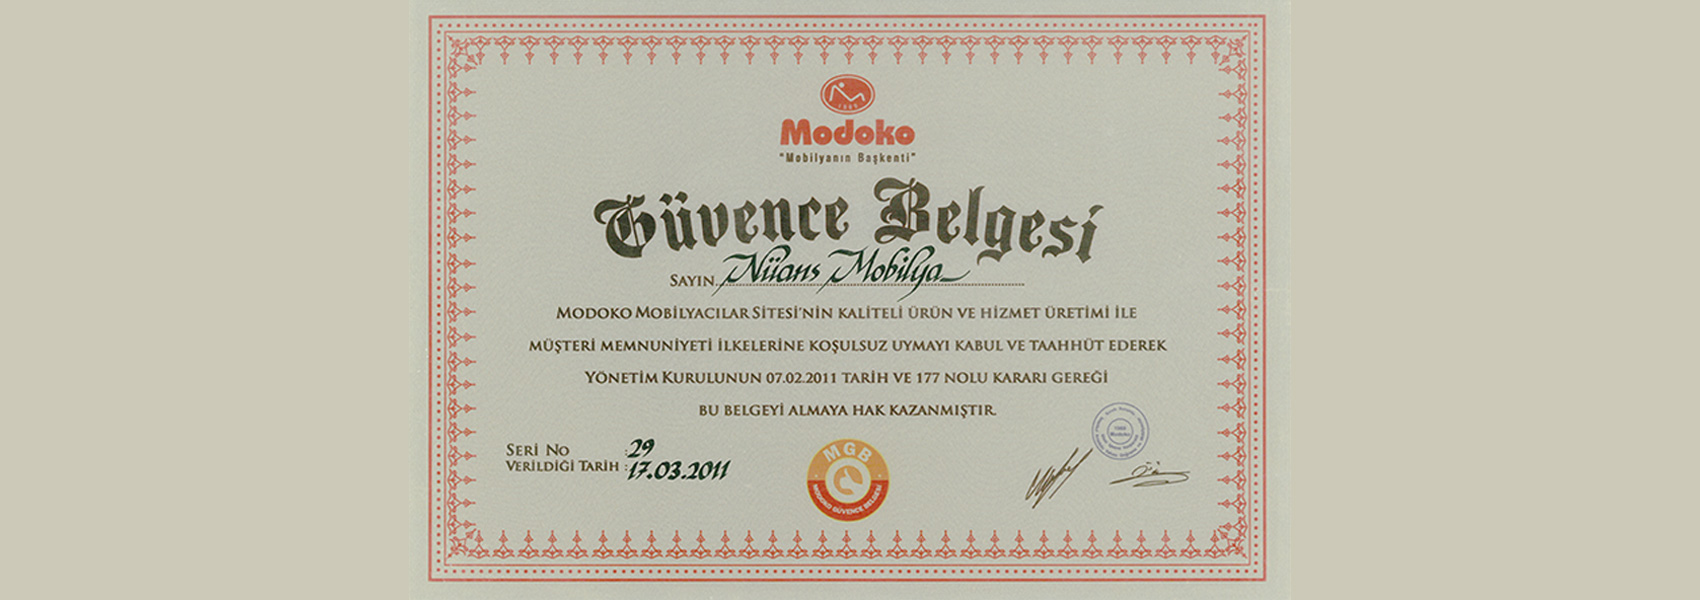 Modoko Assurance Certificate